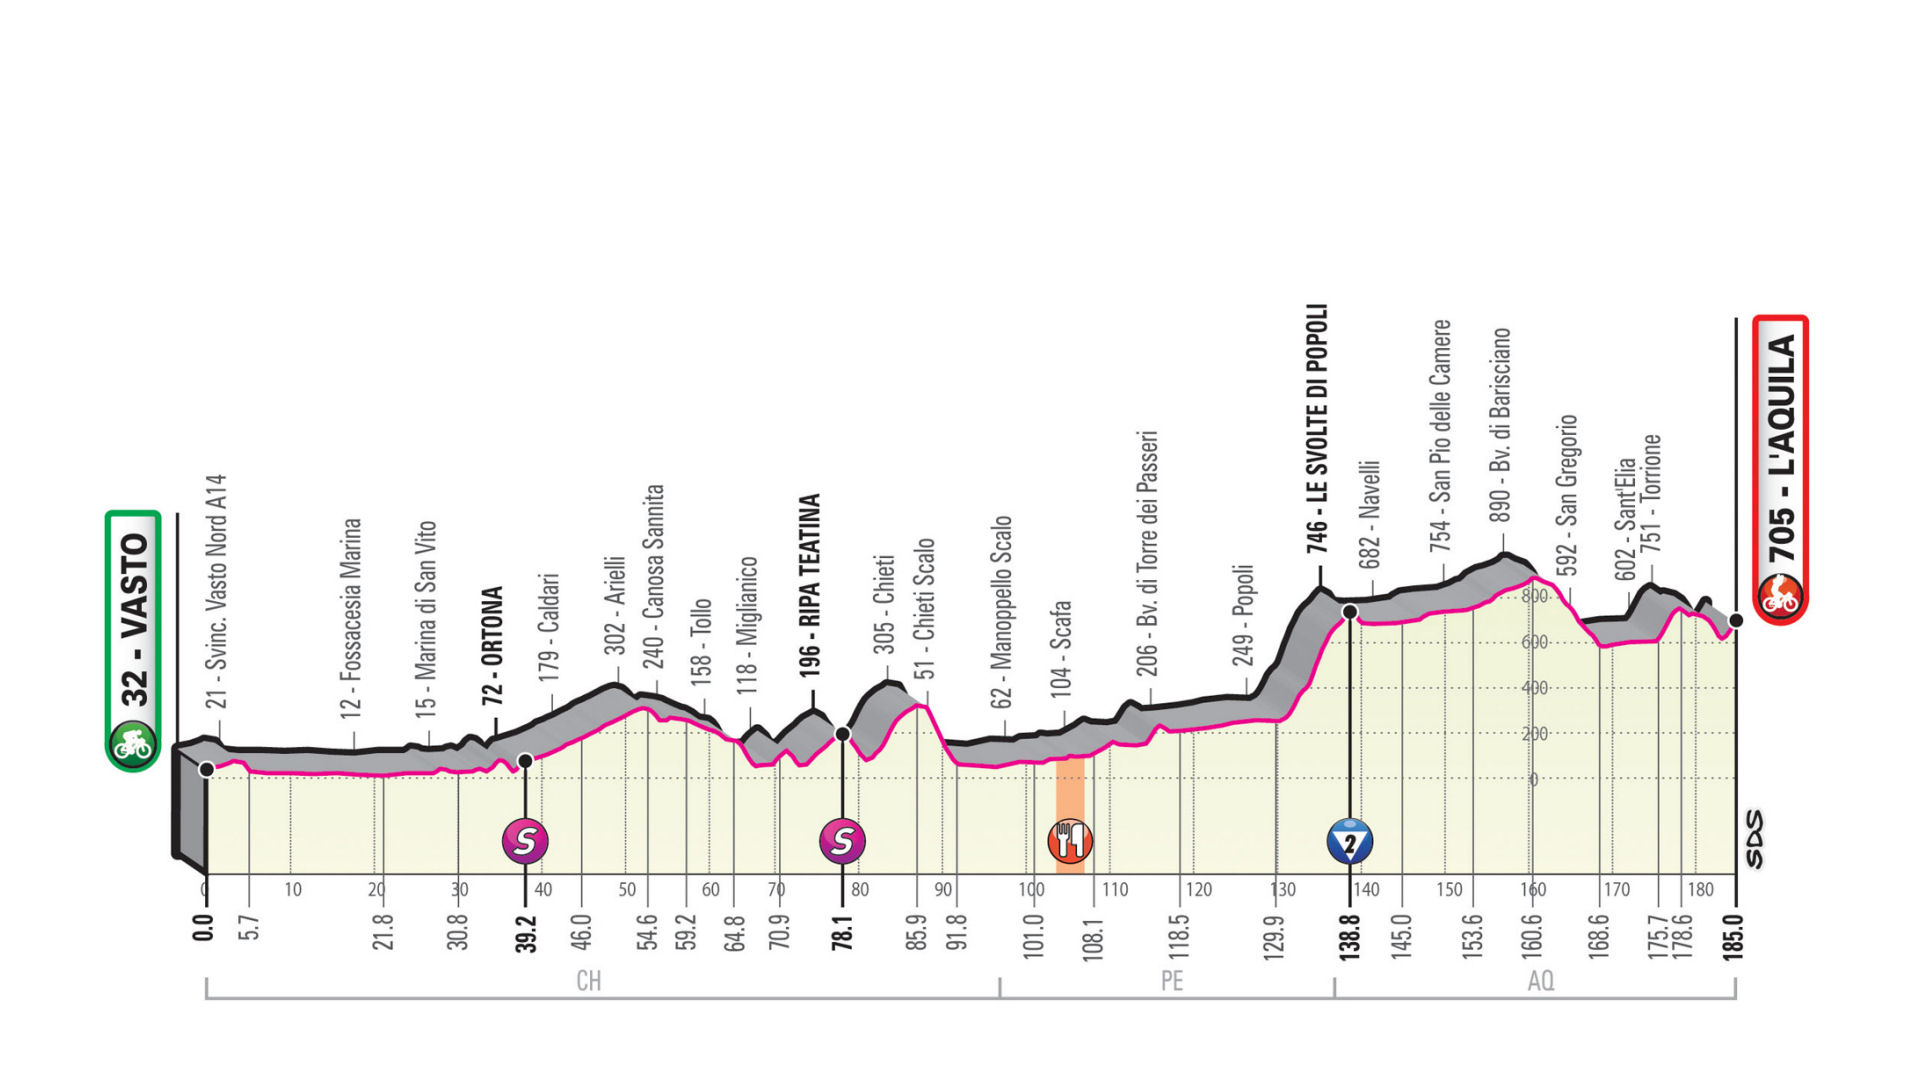 Giro d’Italia 2019: etap 7 – przekroje/mapki